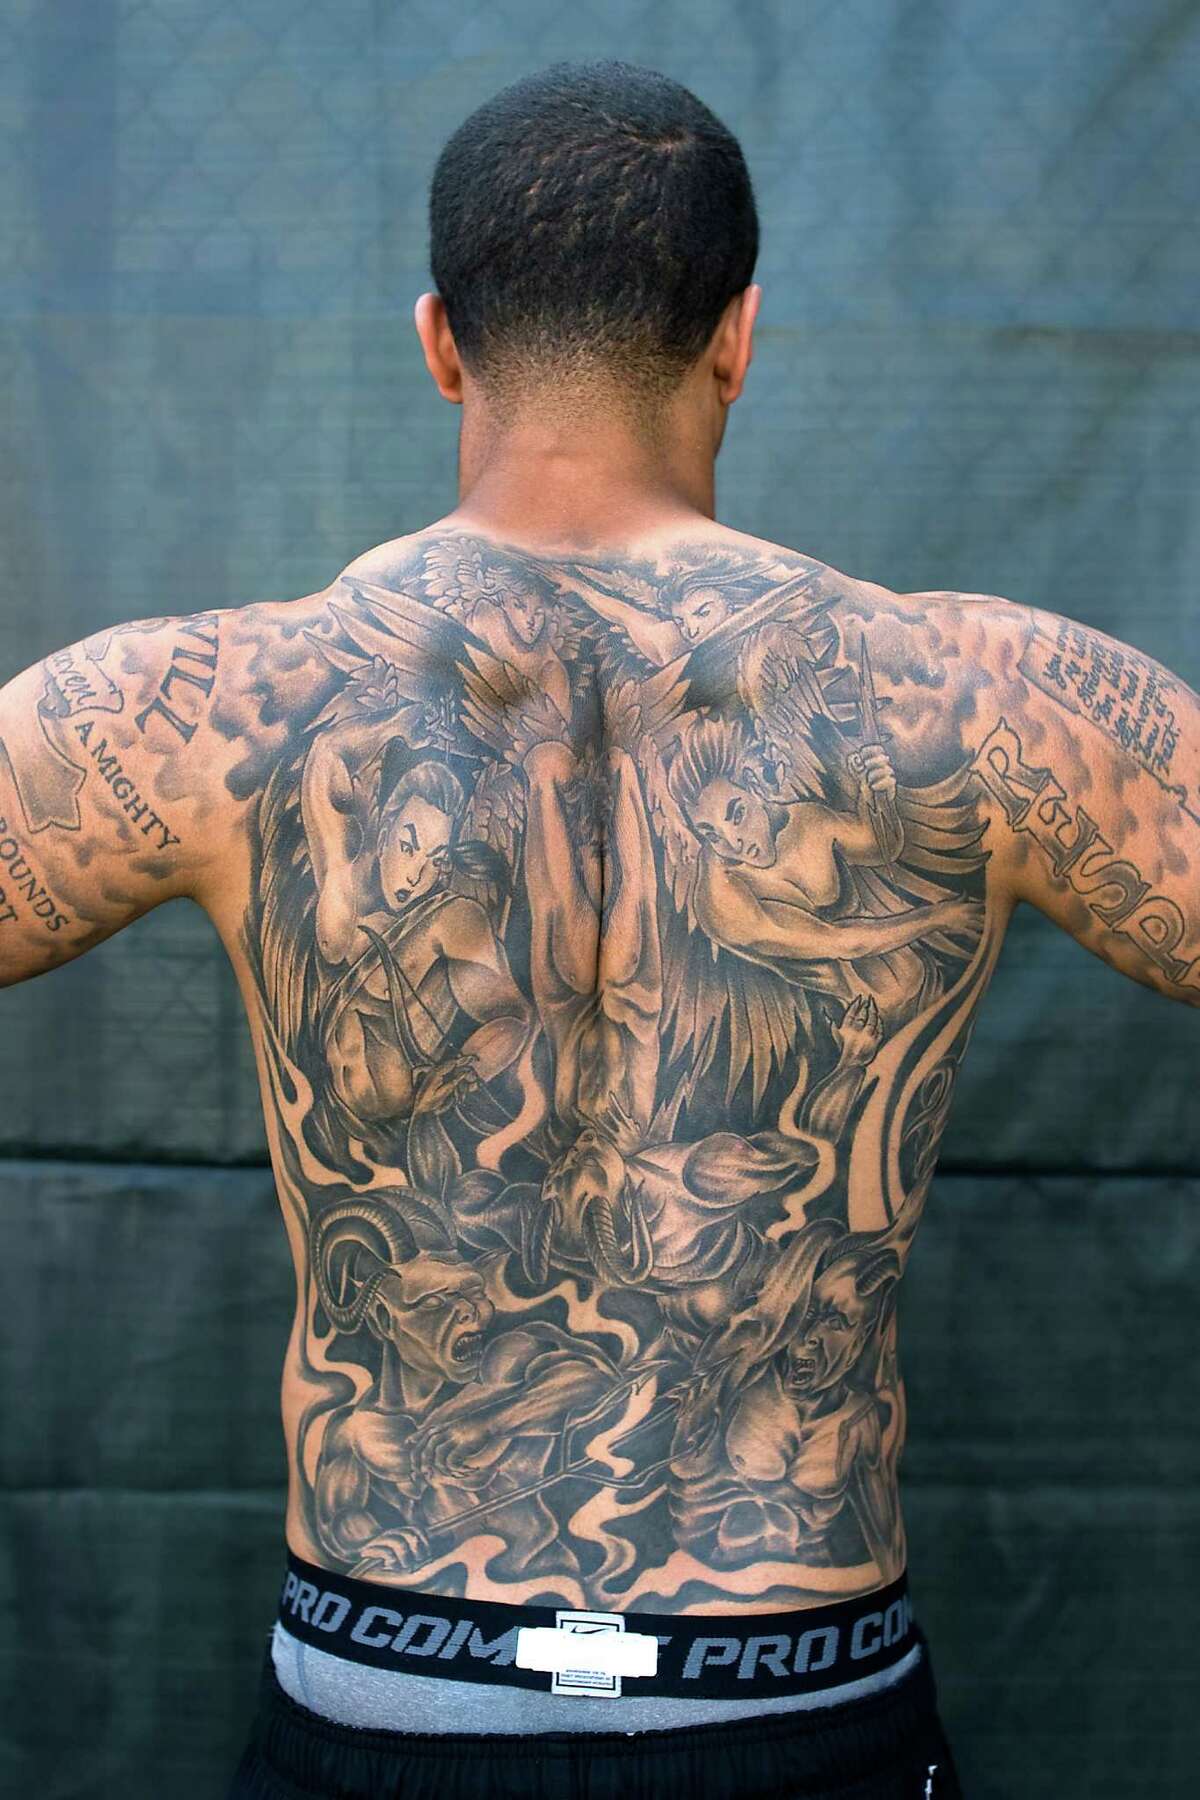 Quarterback Colin Kaepernick shows off his intricate back tattoo.